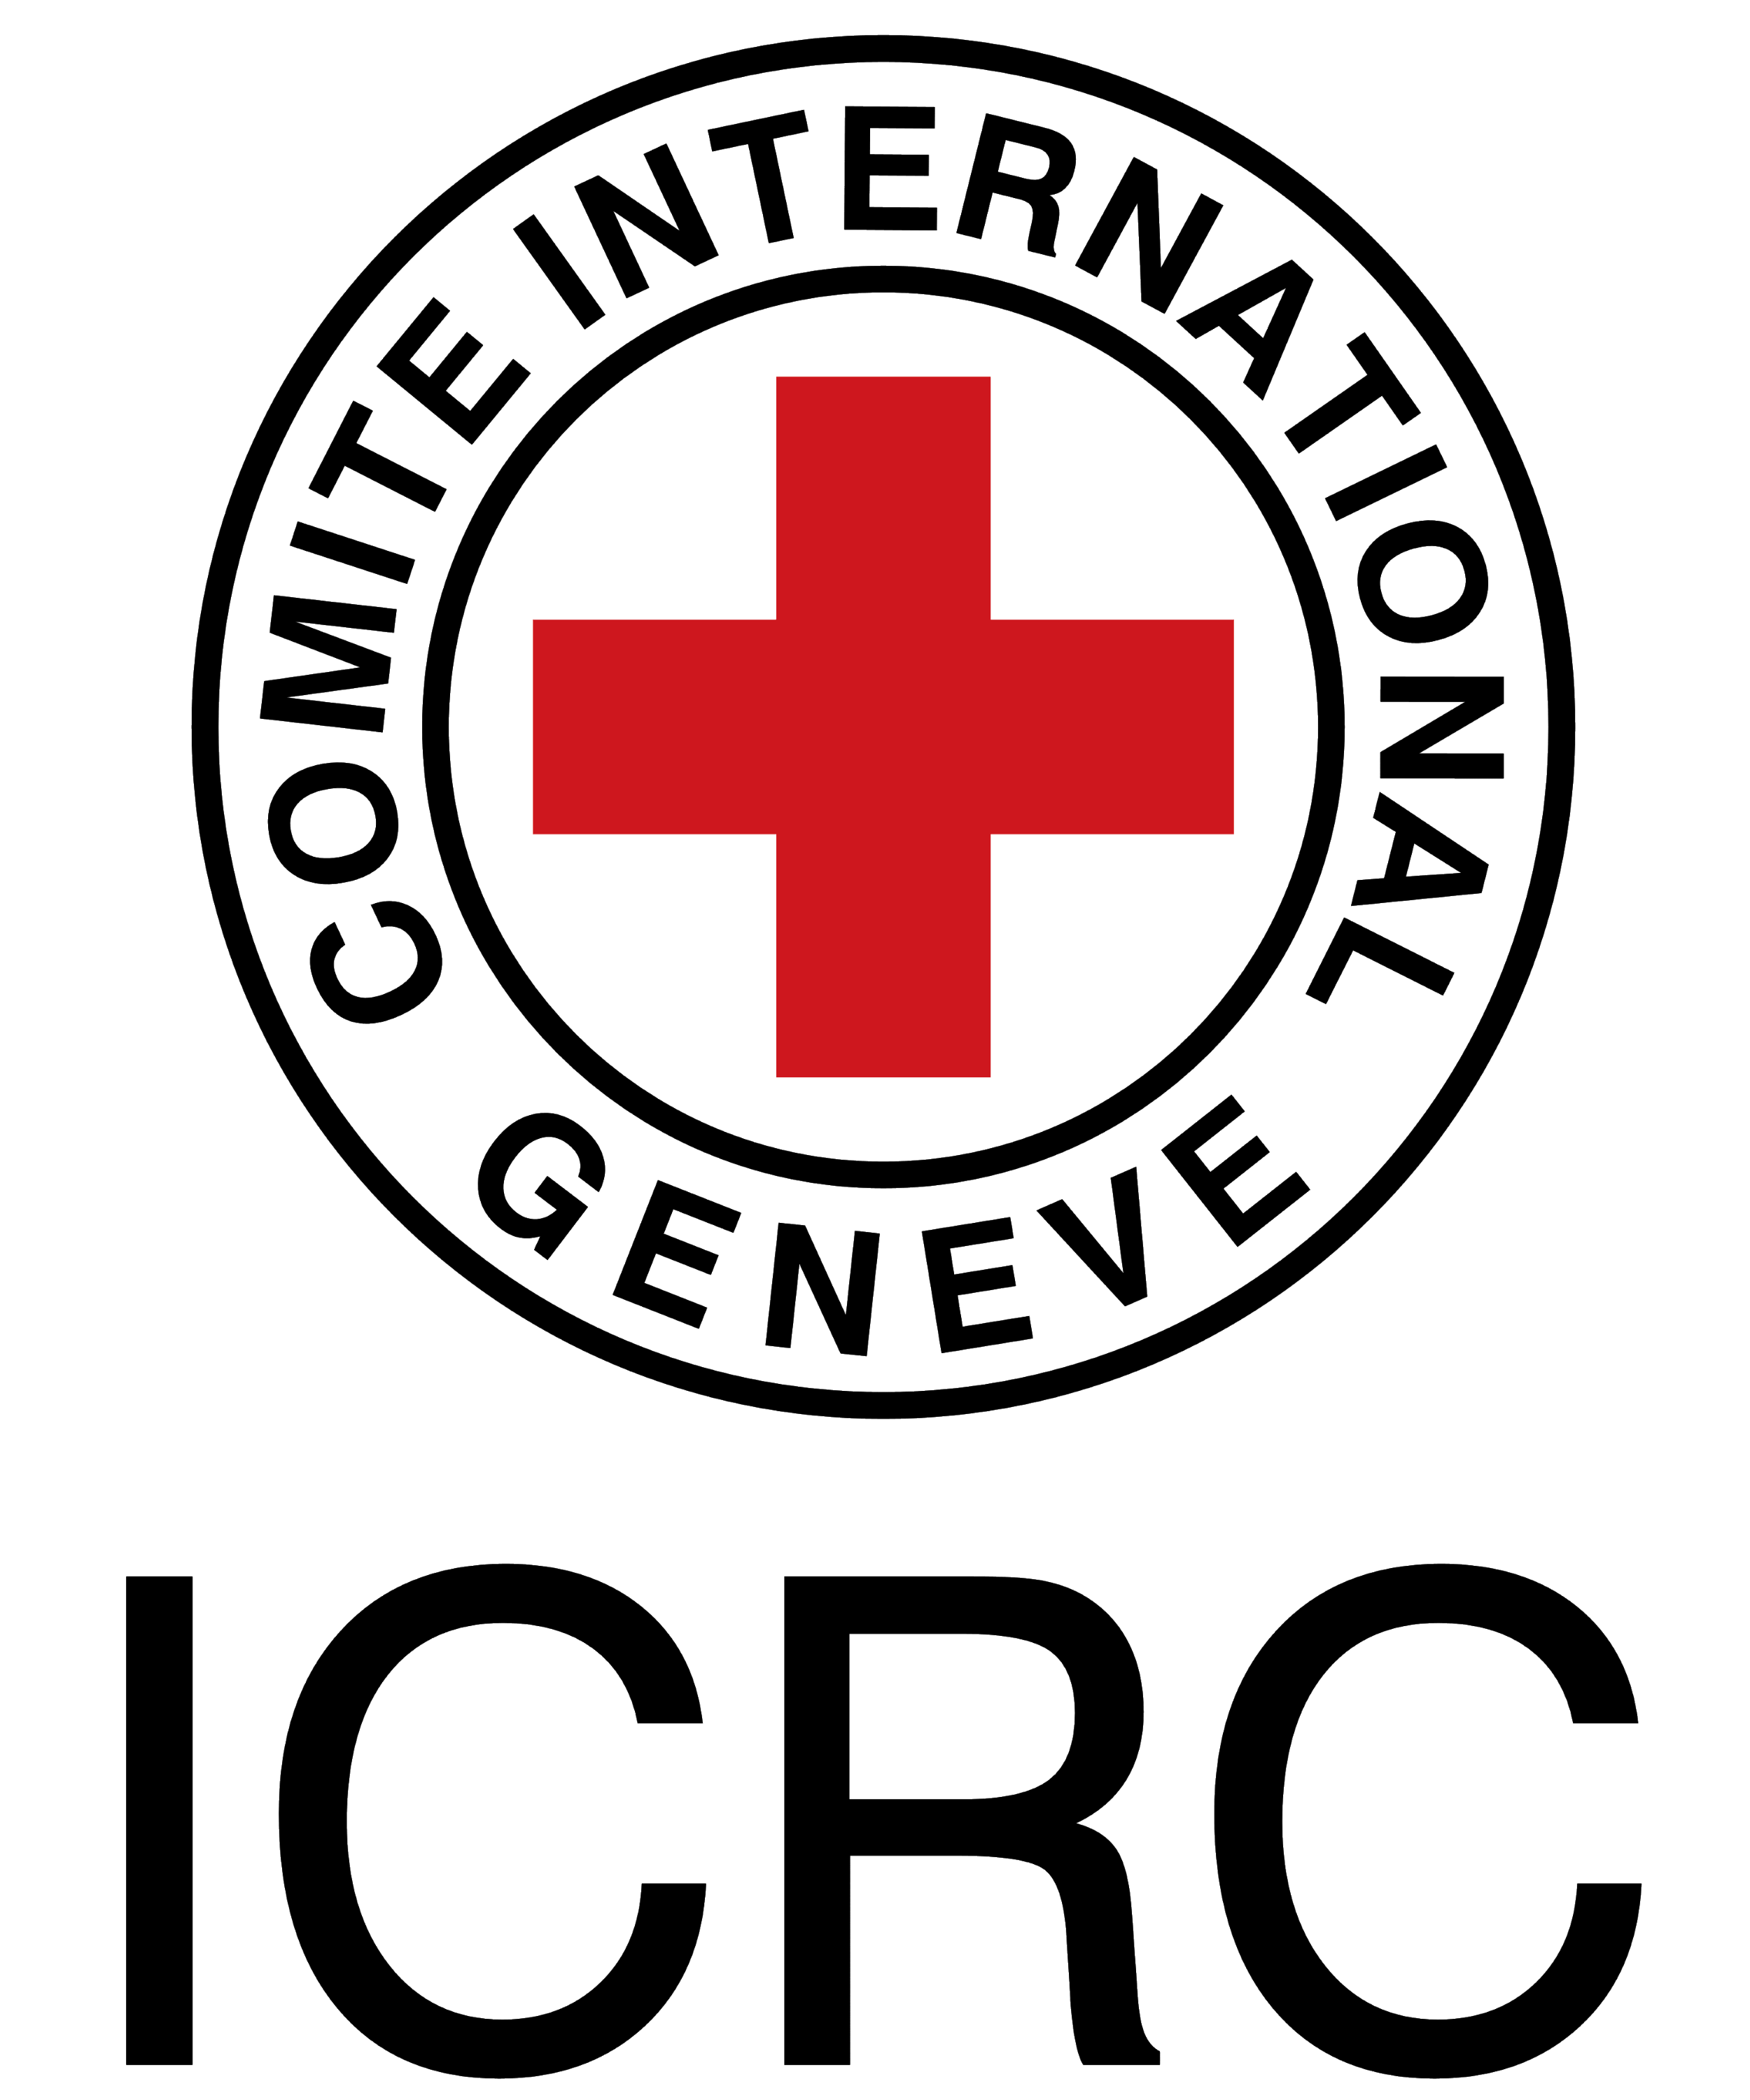 ICRC (Red Cross) logo, logotype